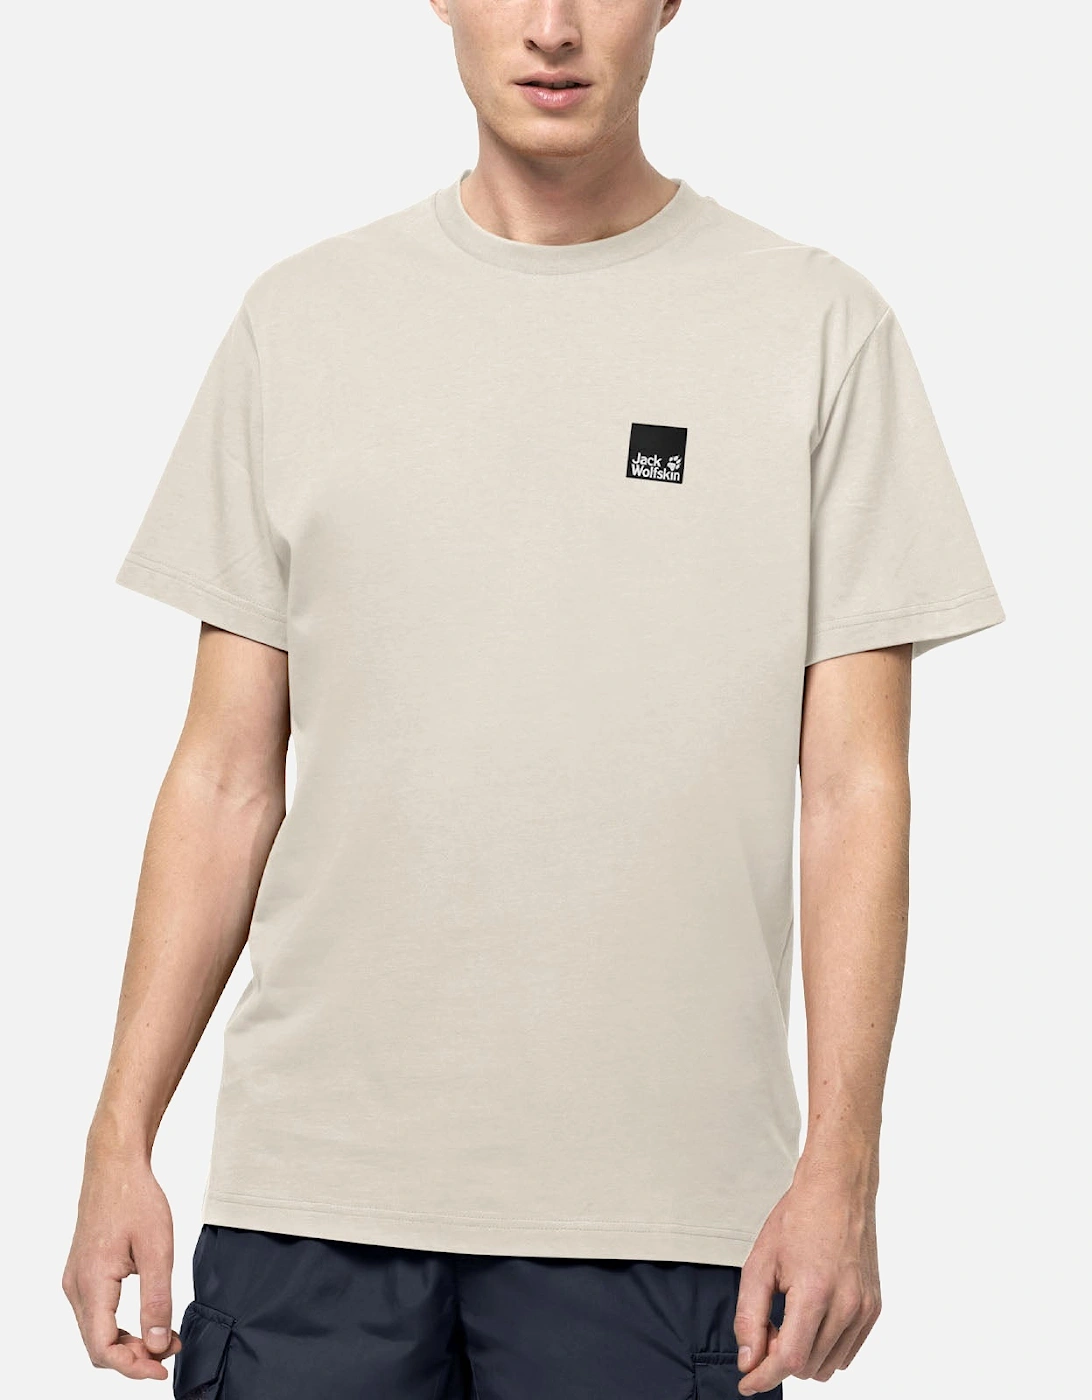 Mens 365 Casual Cotton Short Sleeve T-Shirt Top Tee